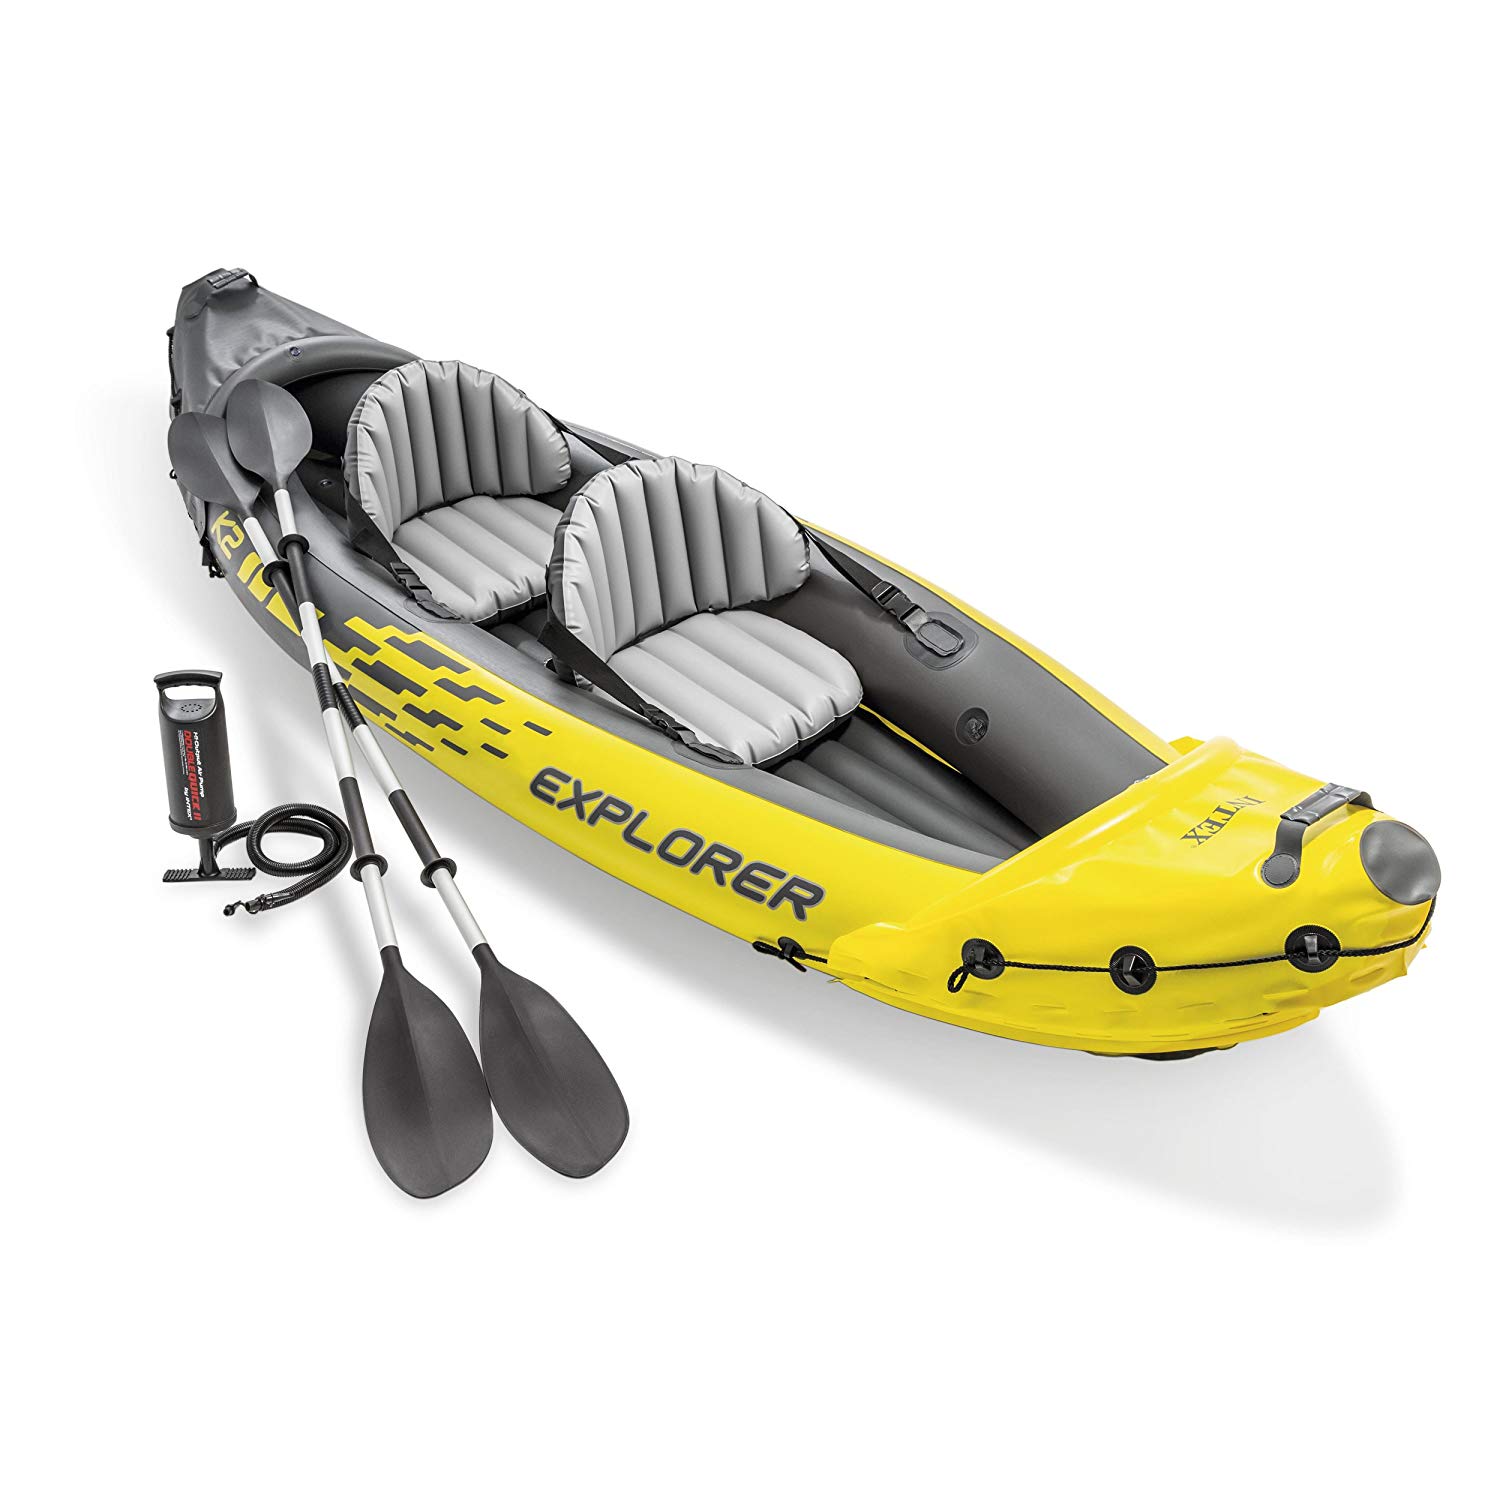 Intex Explorer K2 Adjustable Vinyl Kayak, 10-Feet